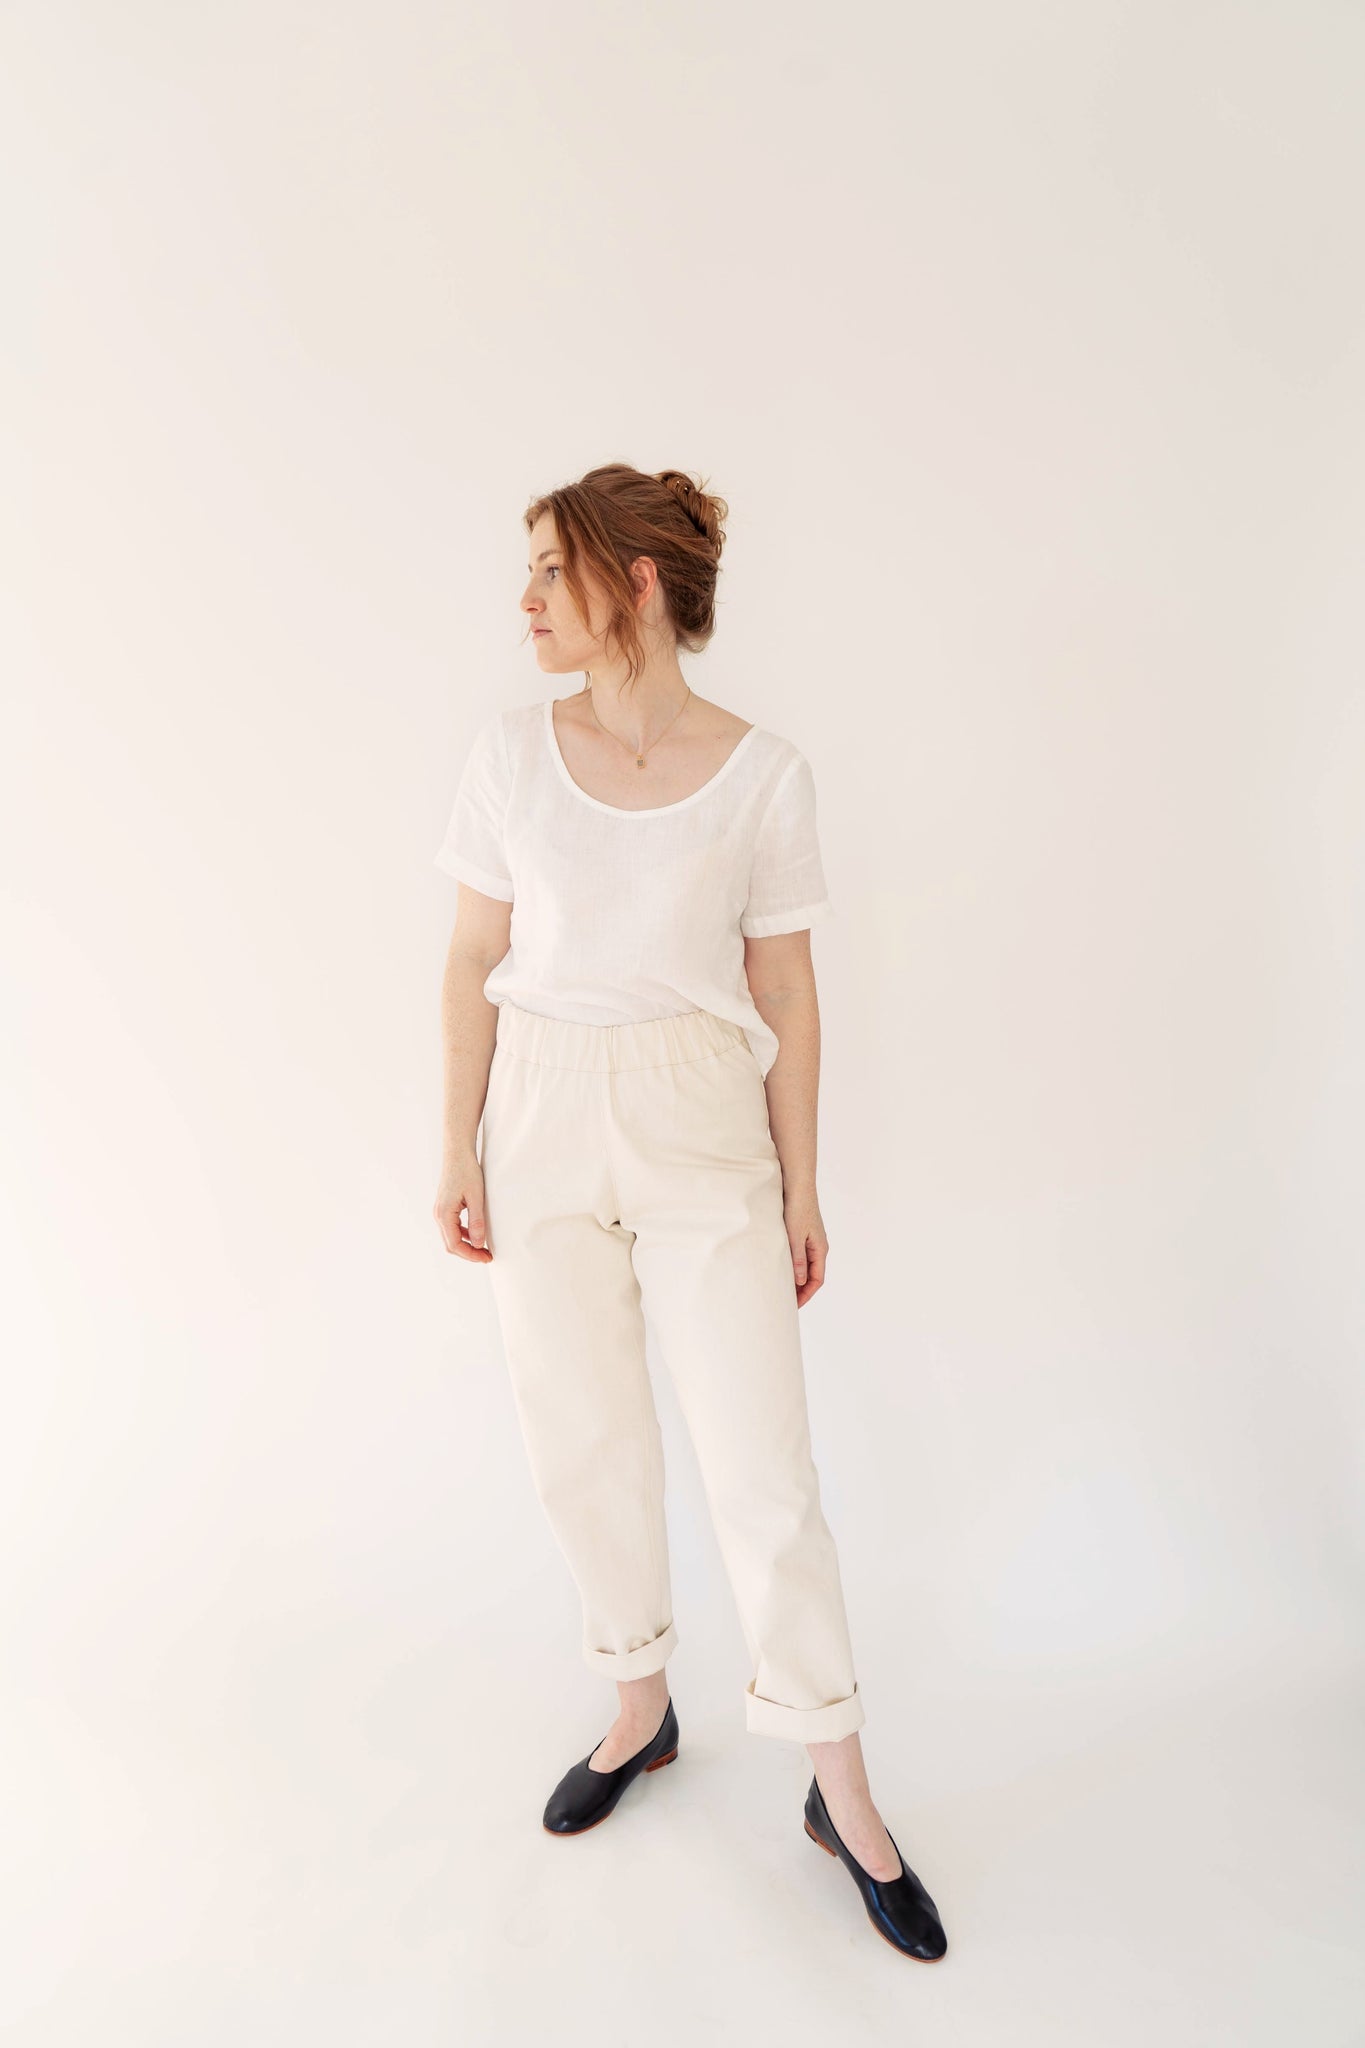 Pomona Pants and Shorts - PDF Sewing Pattern Sizes 00-22 – Anna